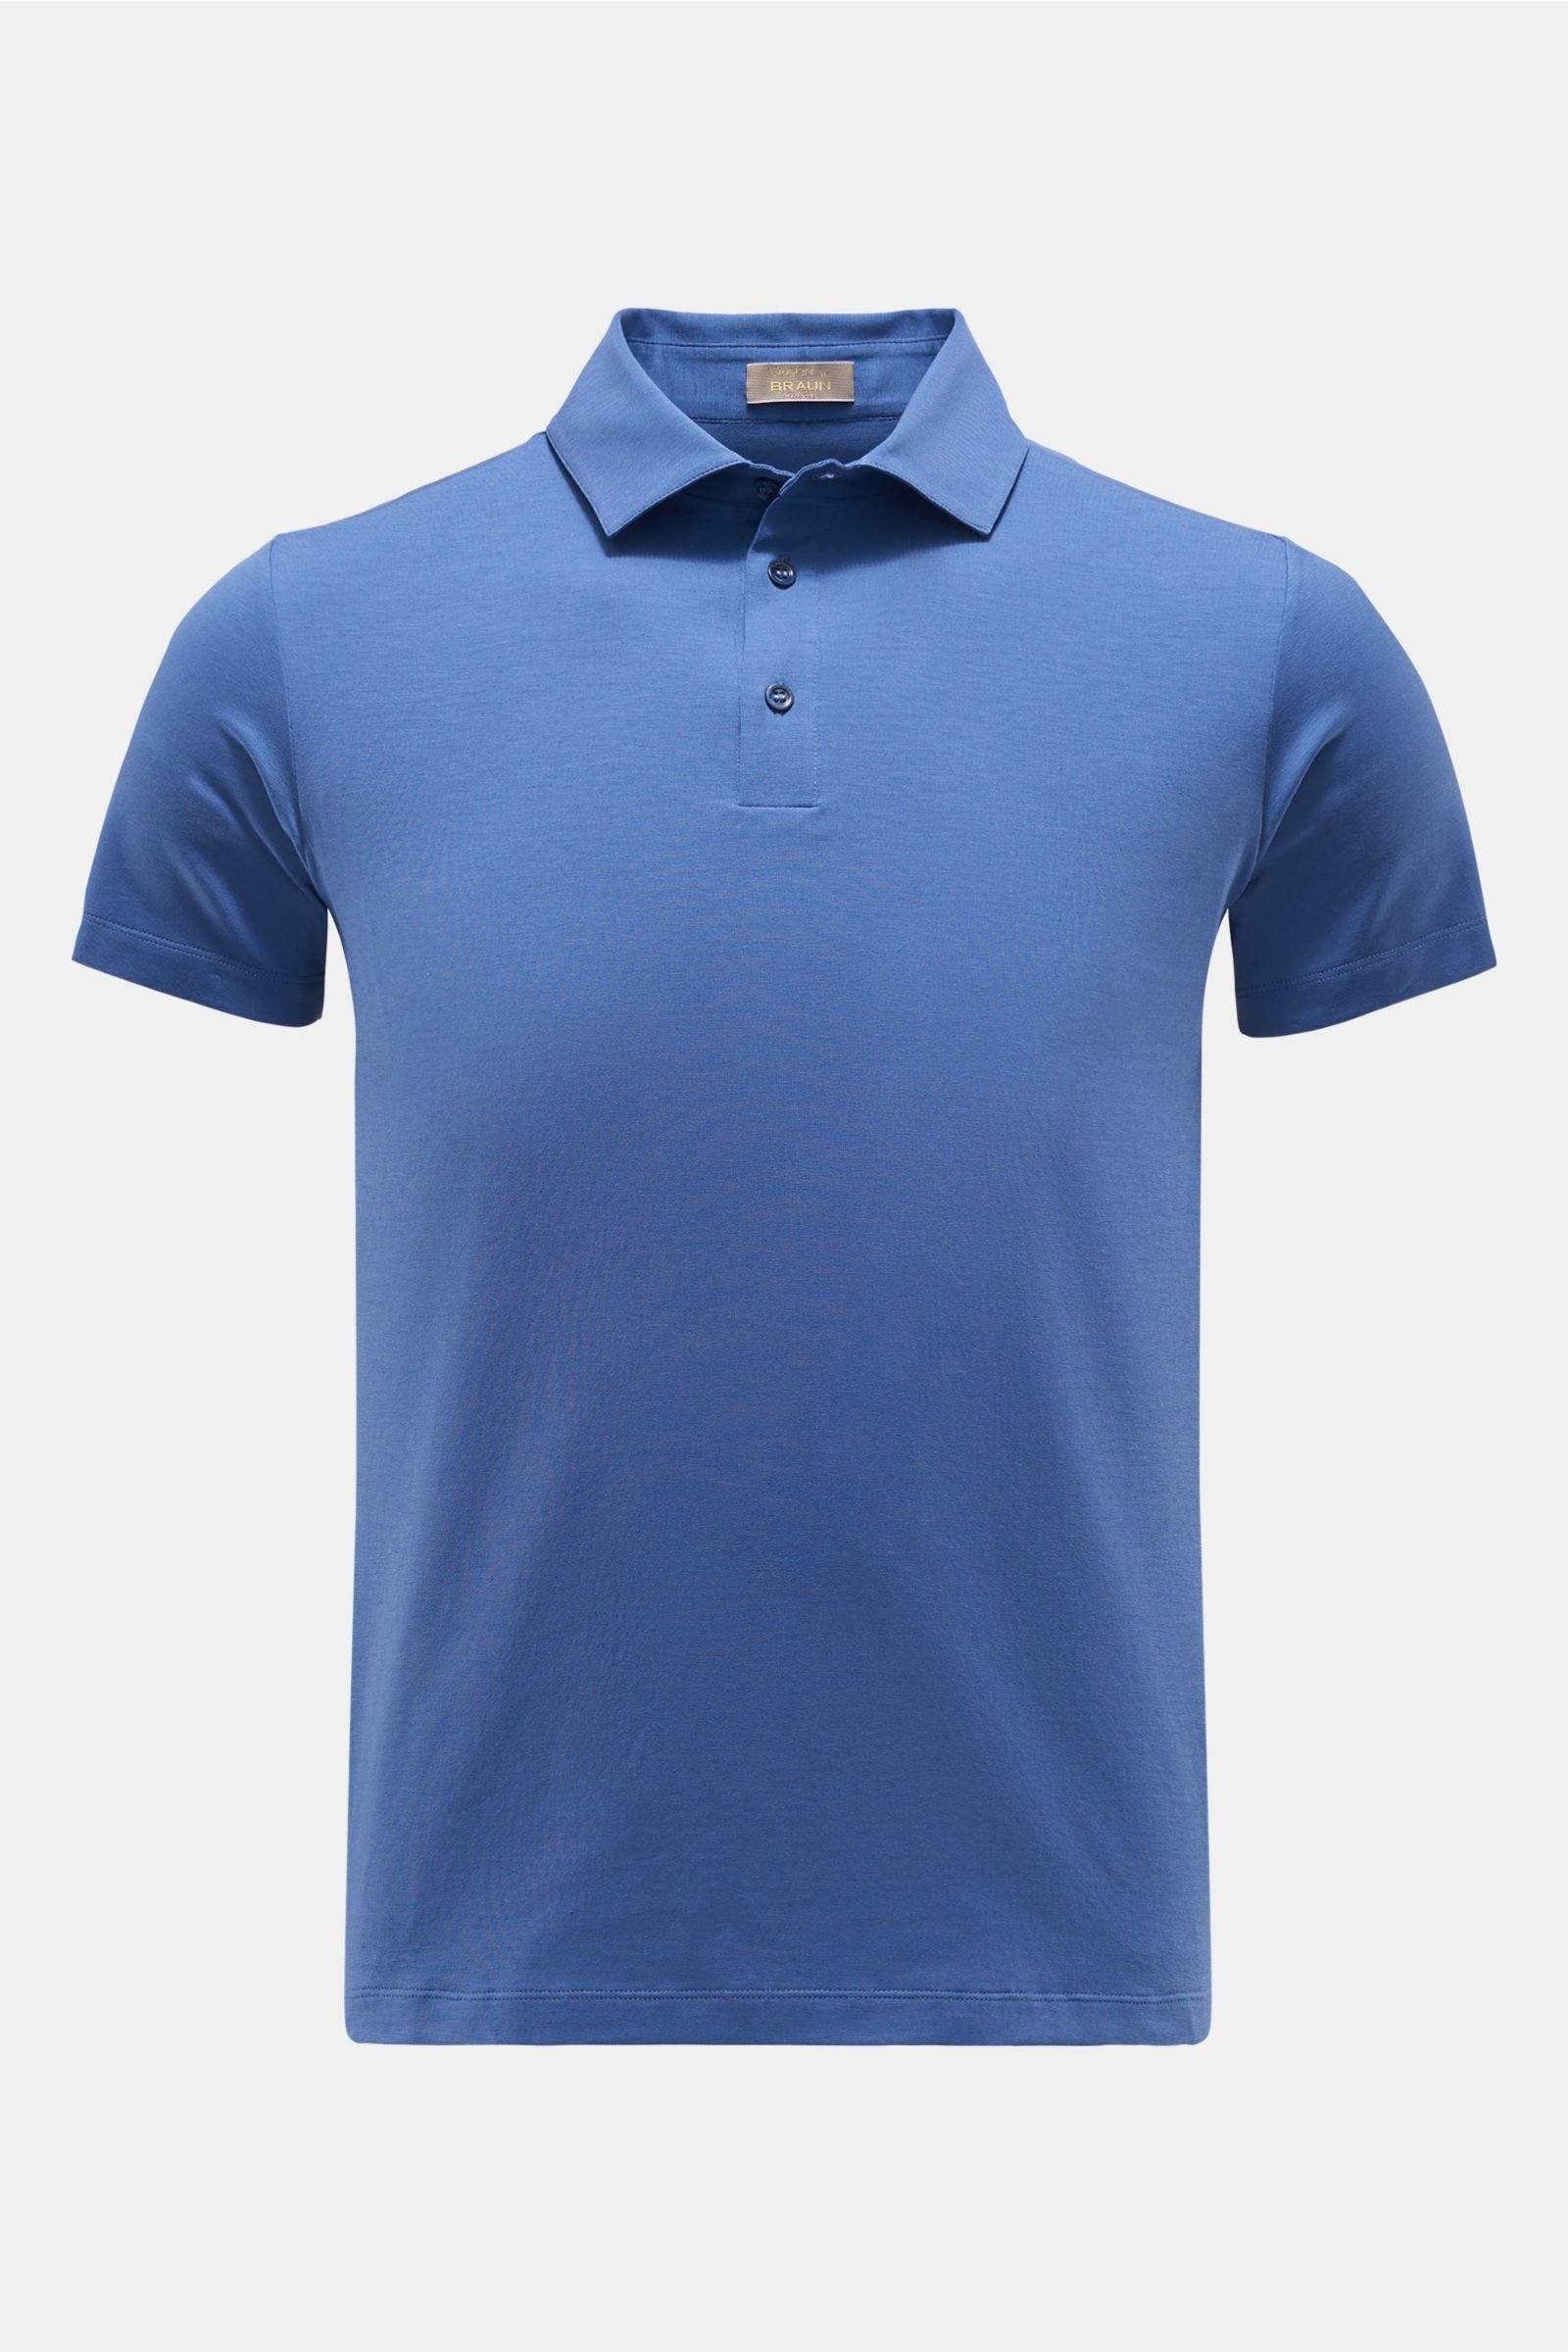 Jersey polo shirt grey-blue